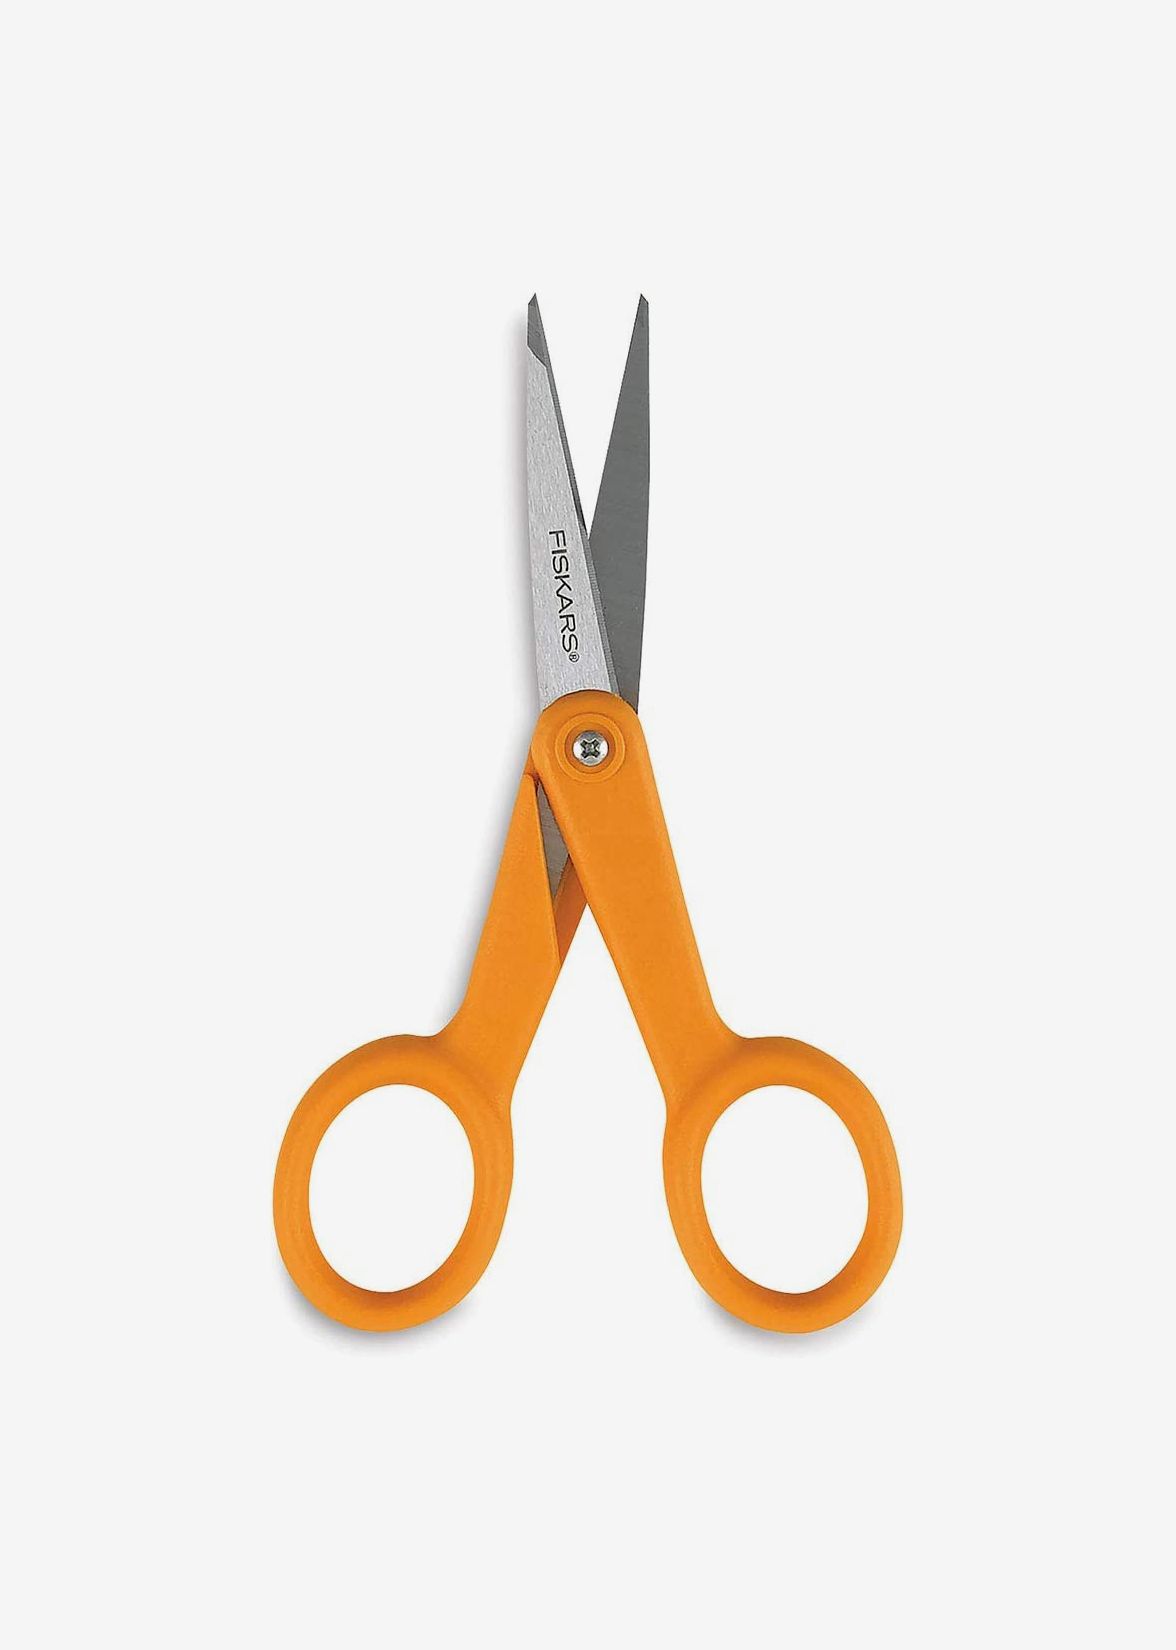 What I Love This Week: Fiskars Kitchen Scissors